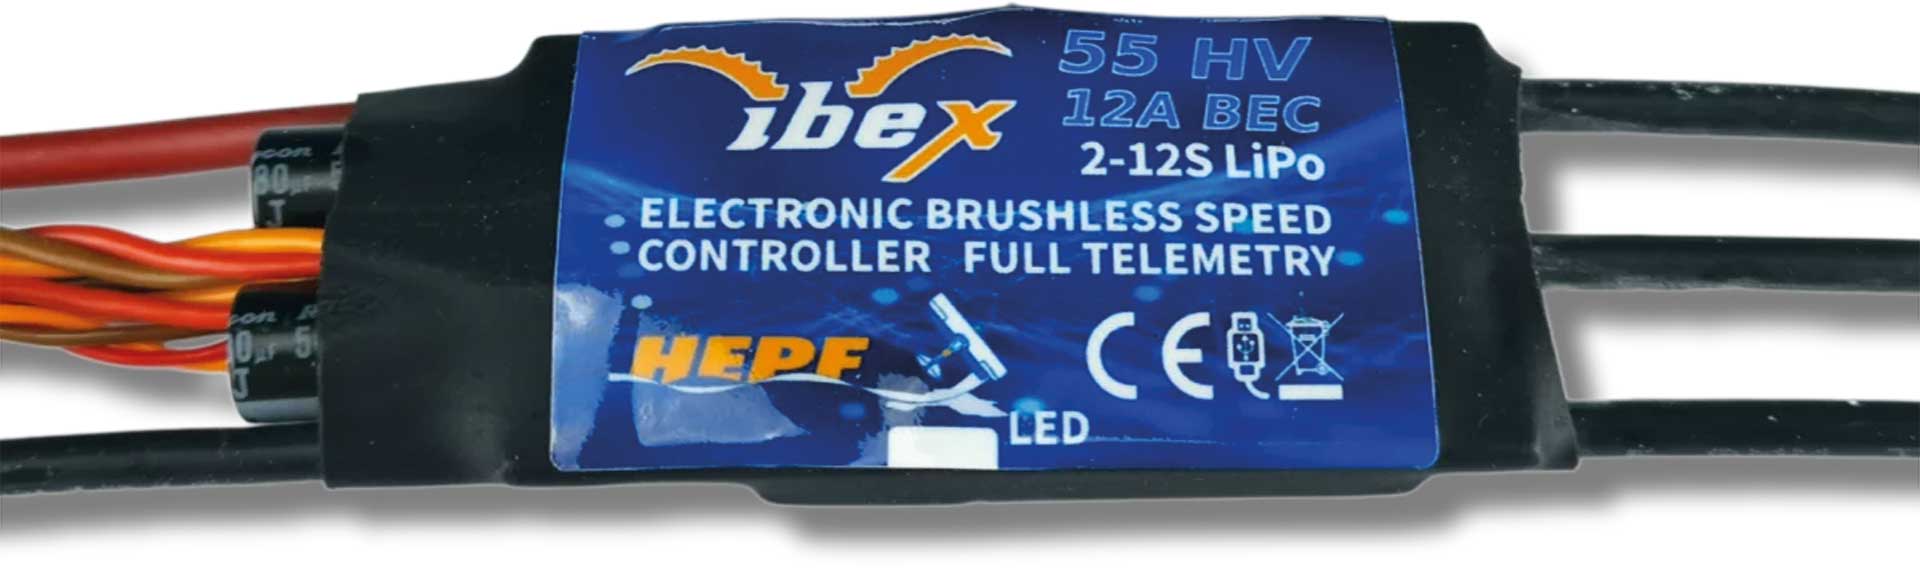 HEPF Ibex 55A Contrôleur Brushless BEC Télémétrie du spectre